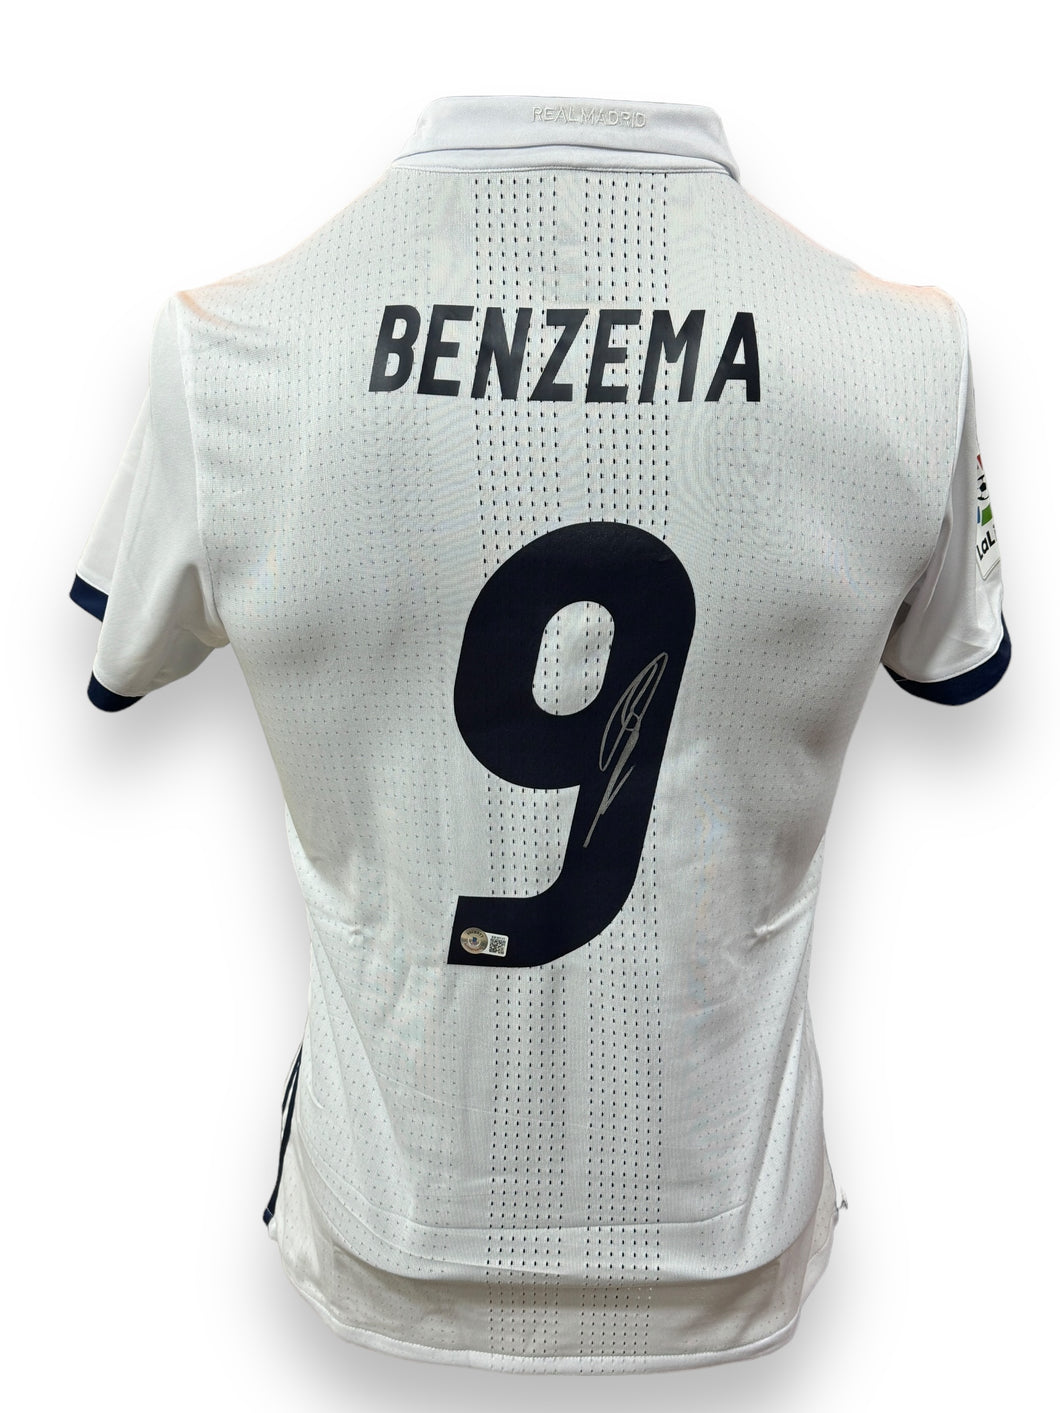 Jersey / Real Madrid / Karim Bezema